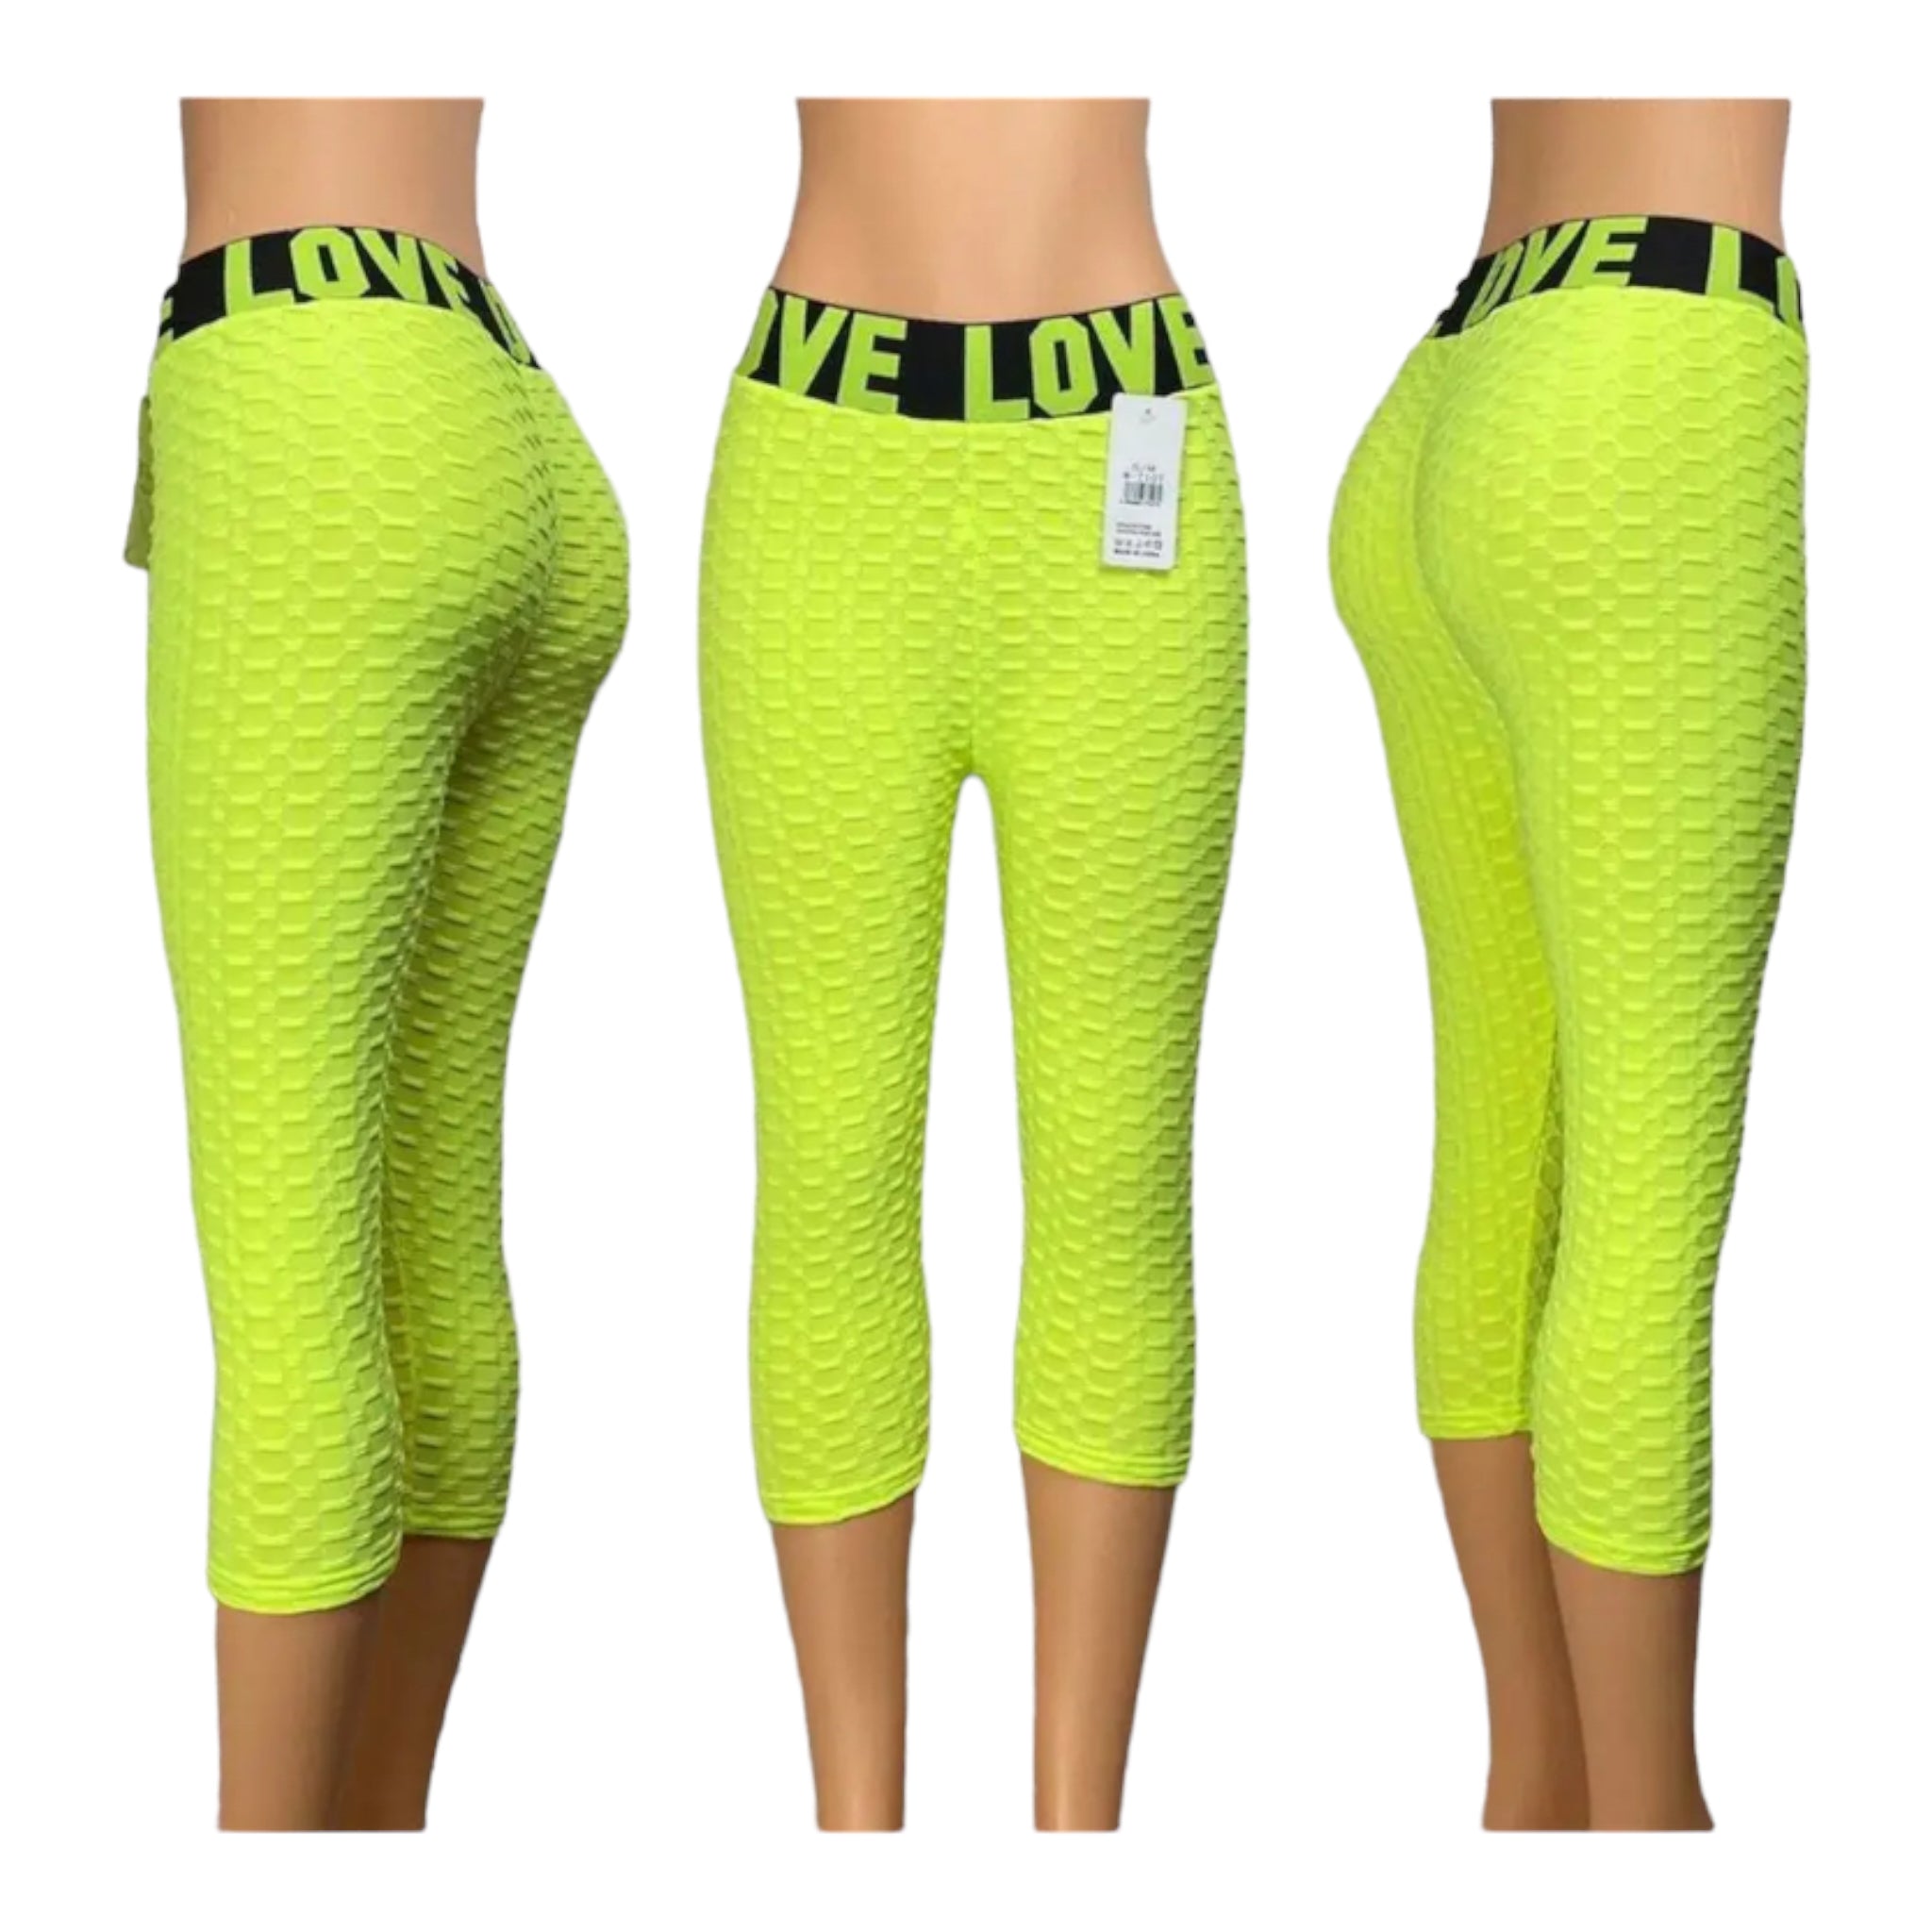 Buy Capri Leggings for Women-Cross Waist Workout Tummy Control Butt Lift  Soft Black Sports Gym Yoga Pants, Black, Large-X-Large at Amazon.in